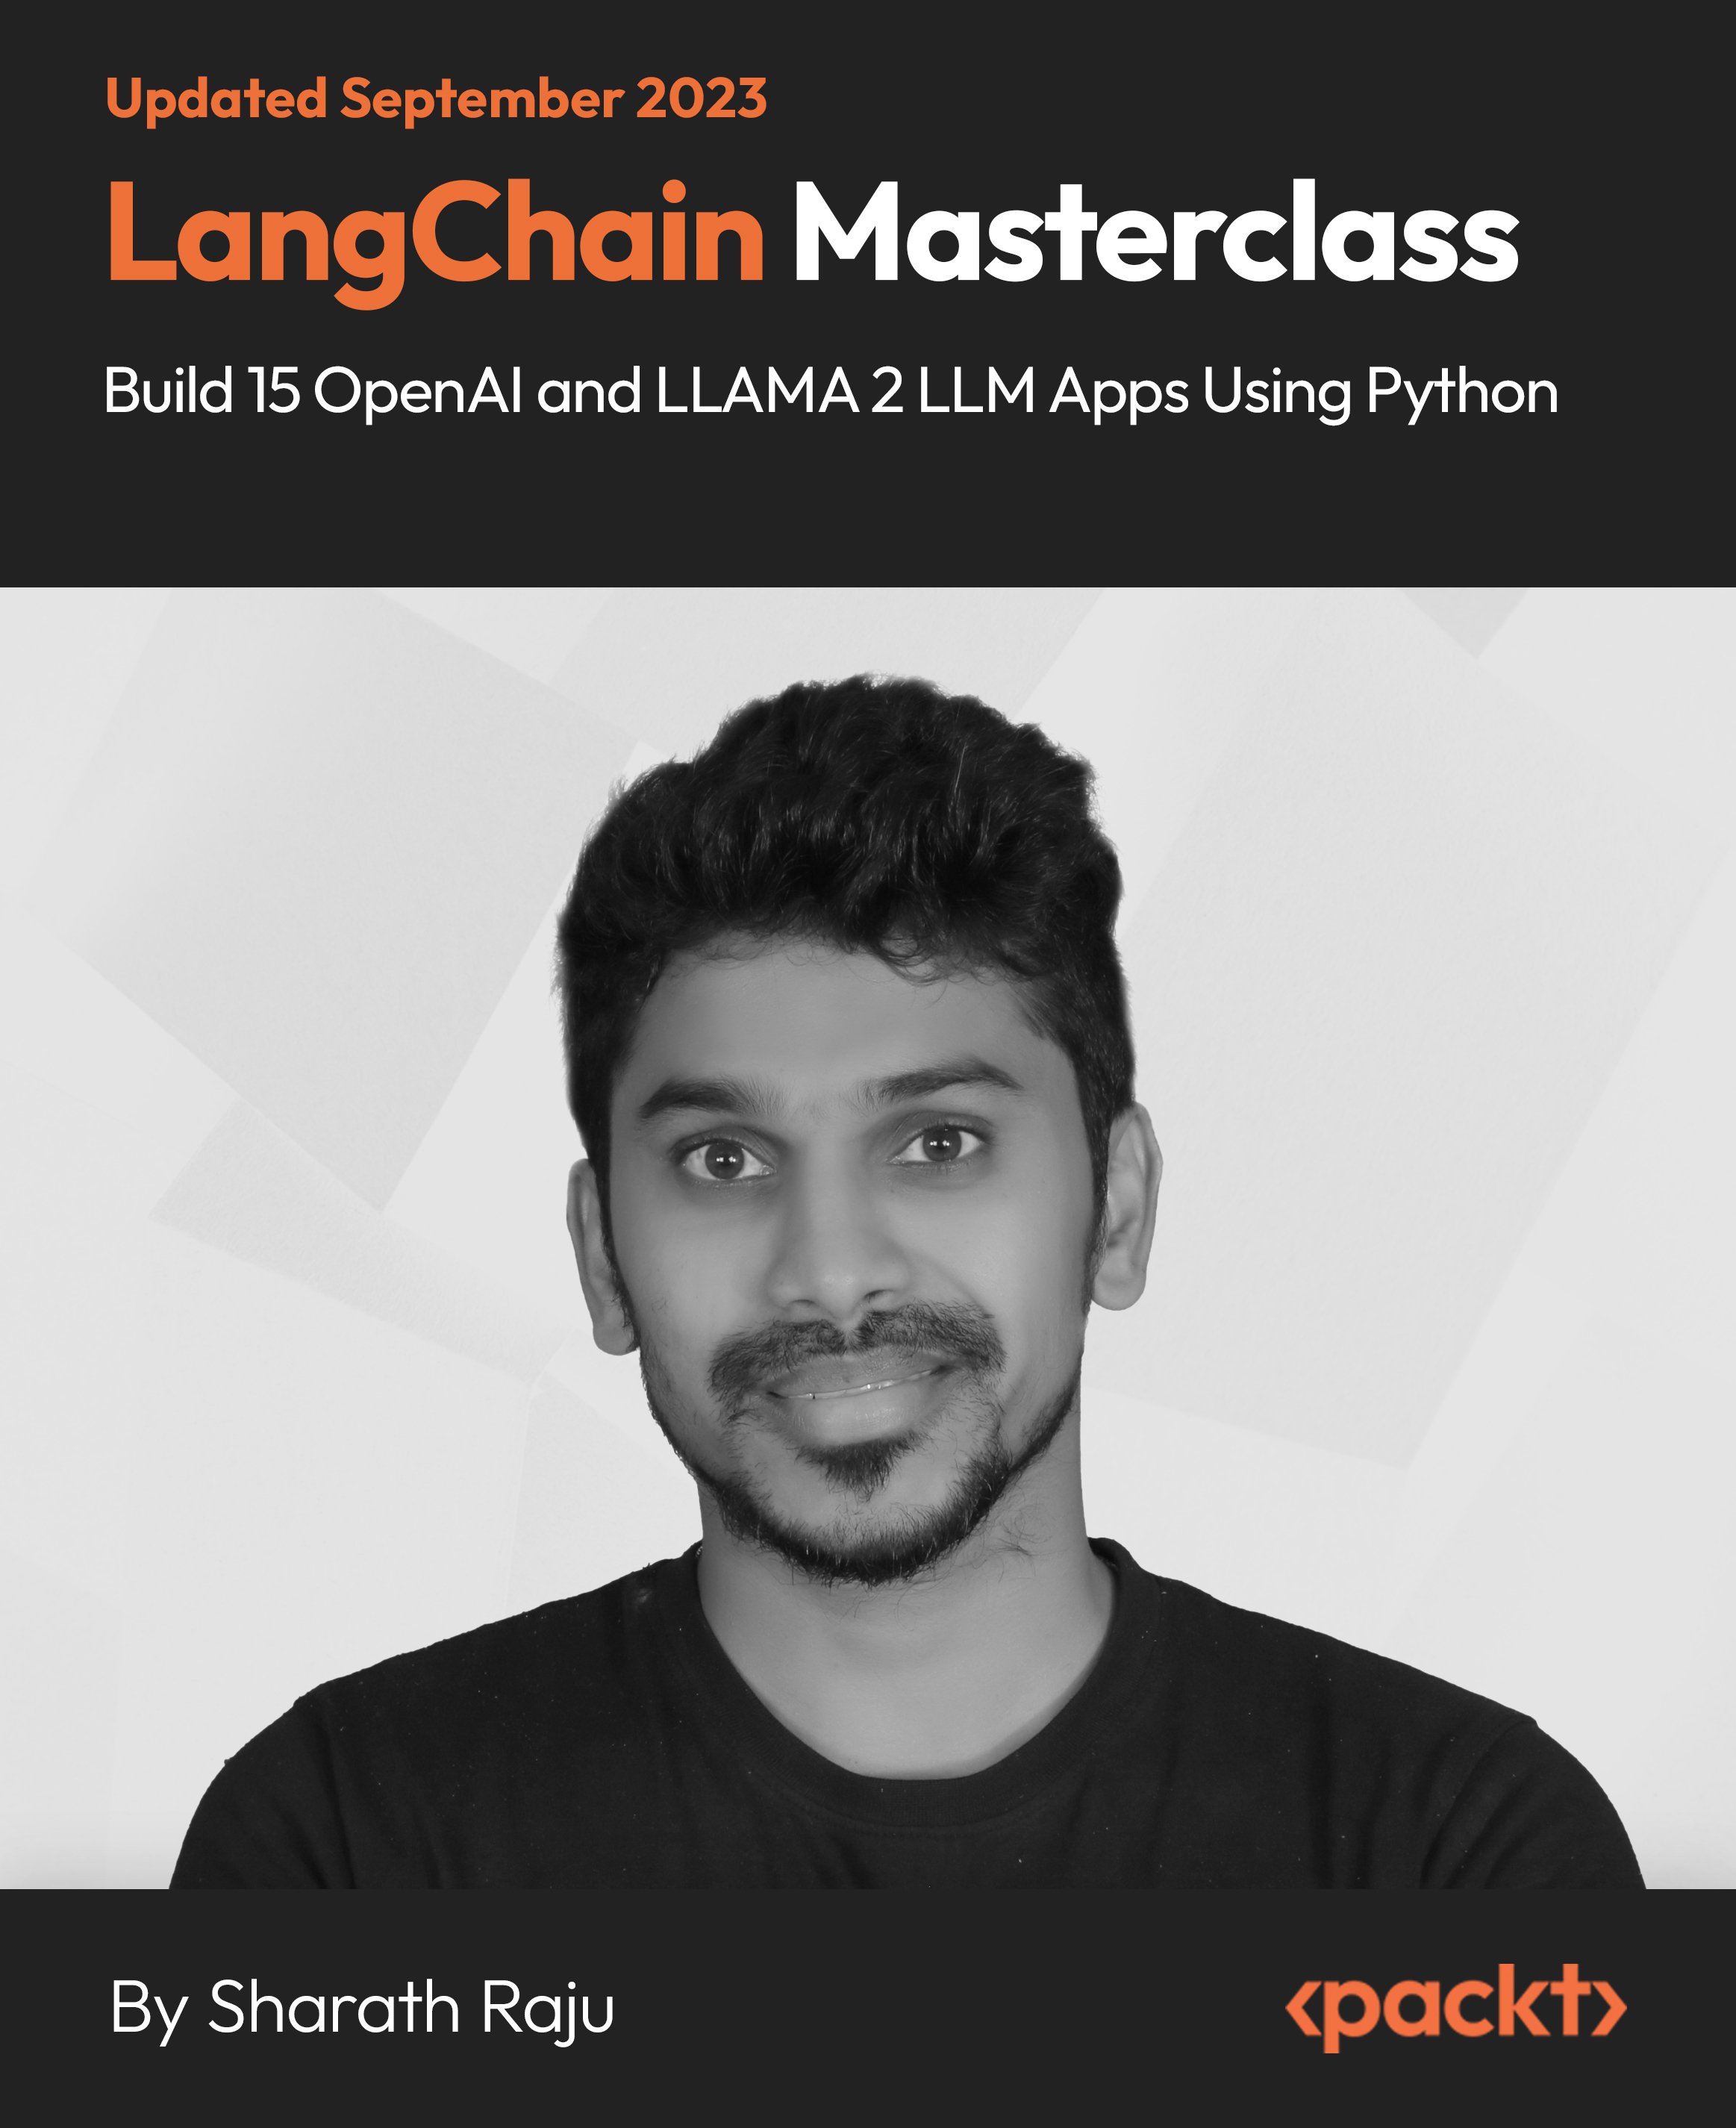 LangChain Masterclass - Build 15 OpenAI and LLAMA 2 LLM Apps Using Python